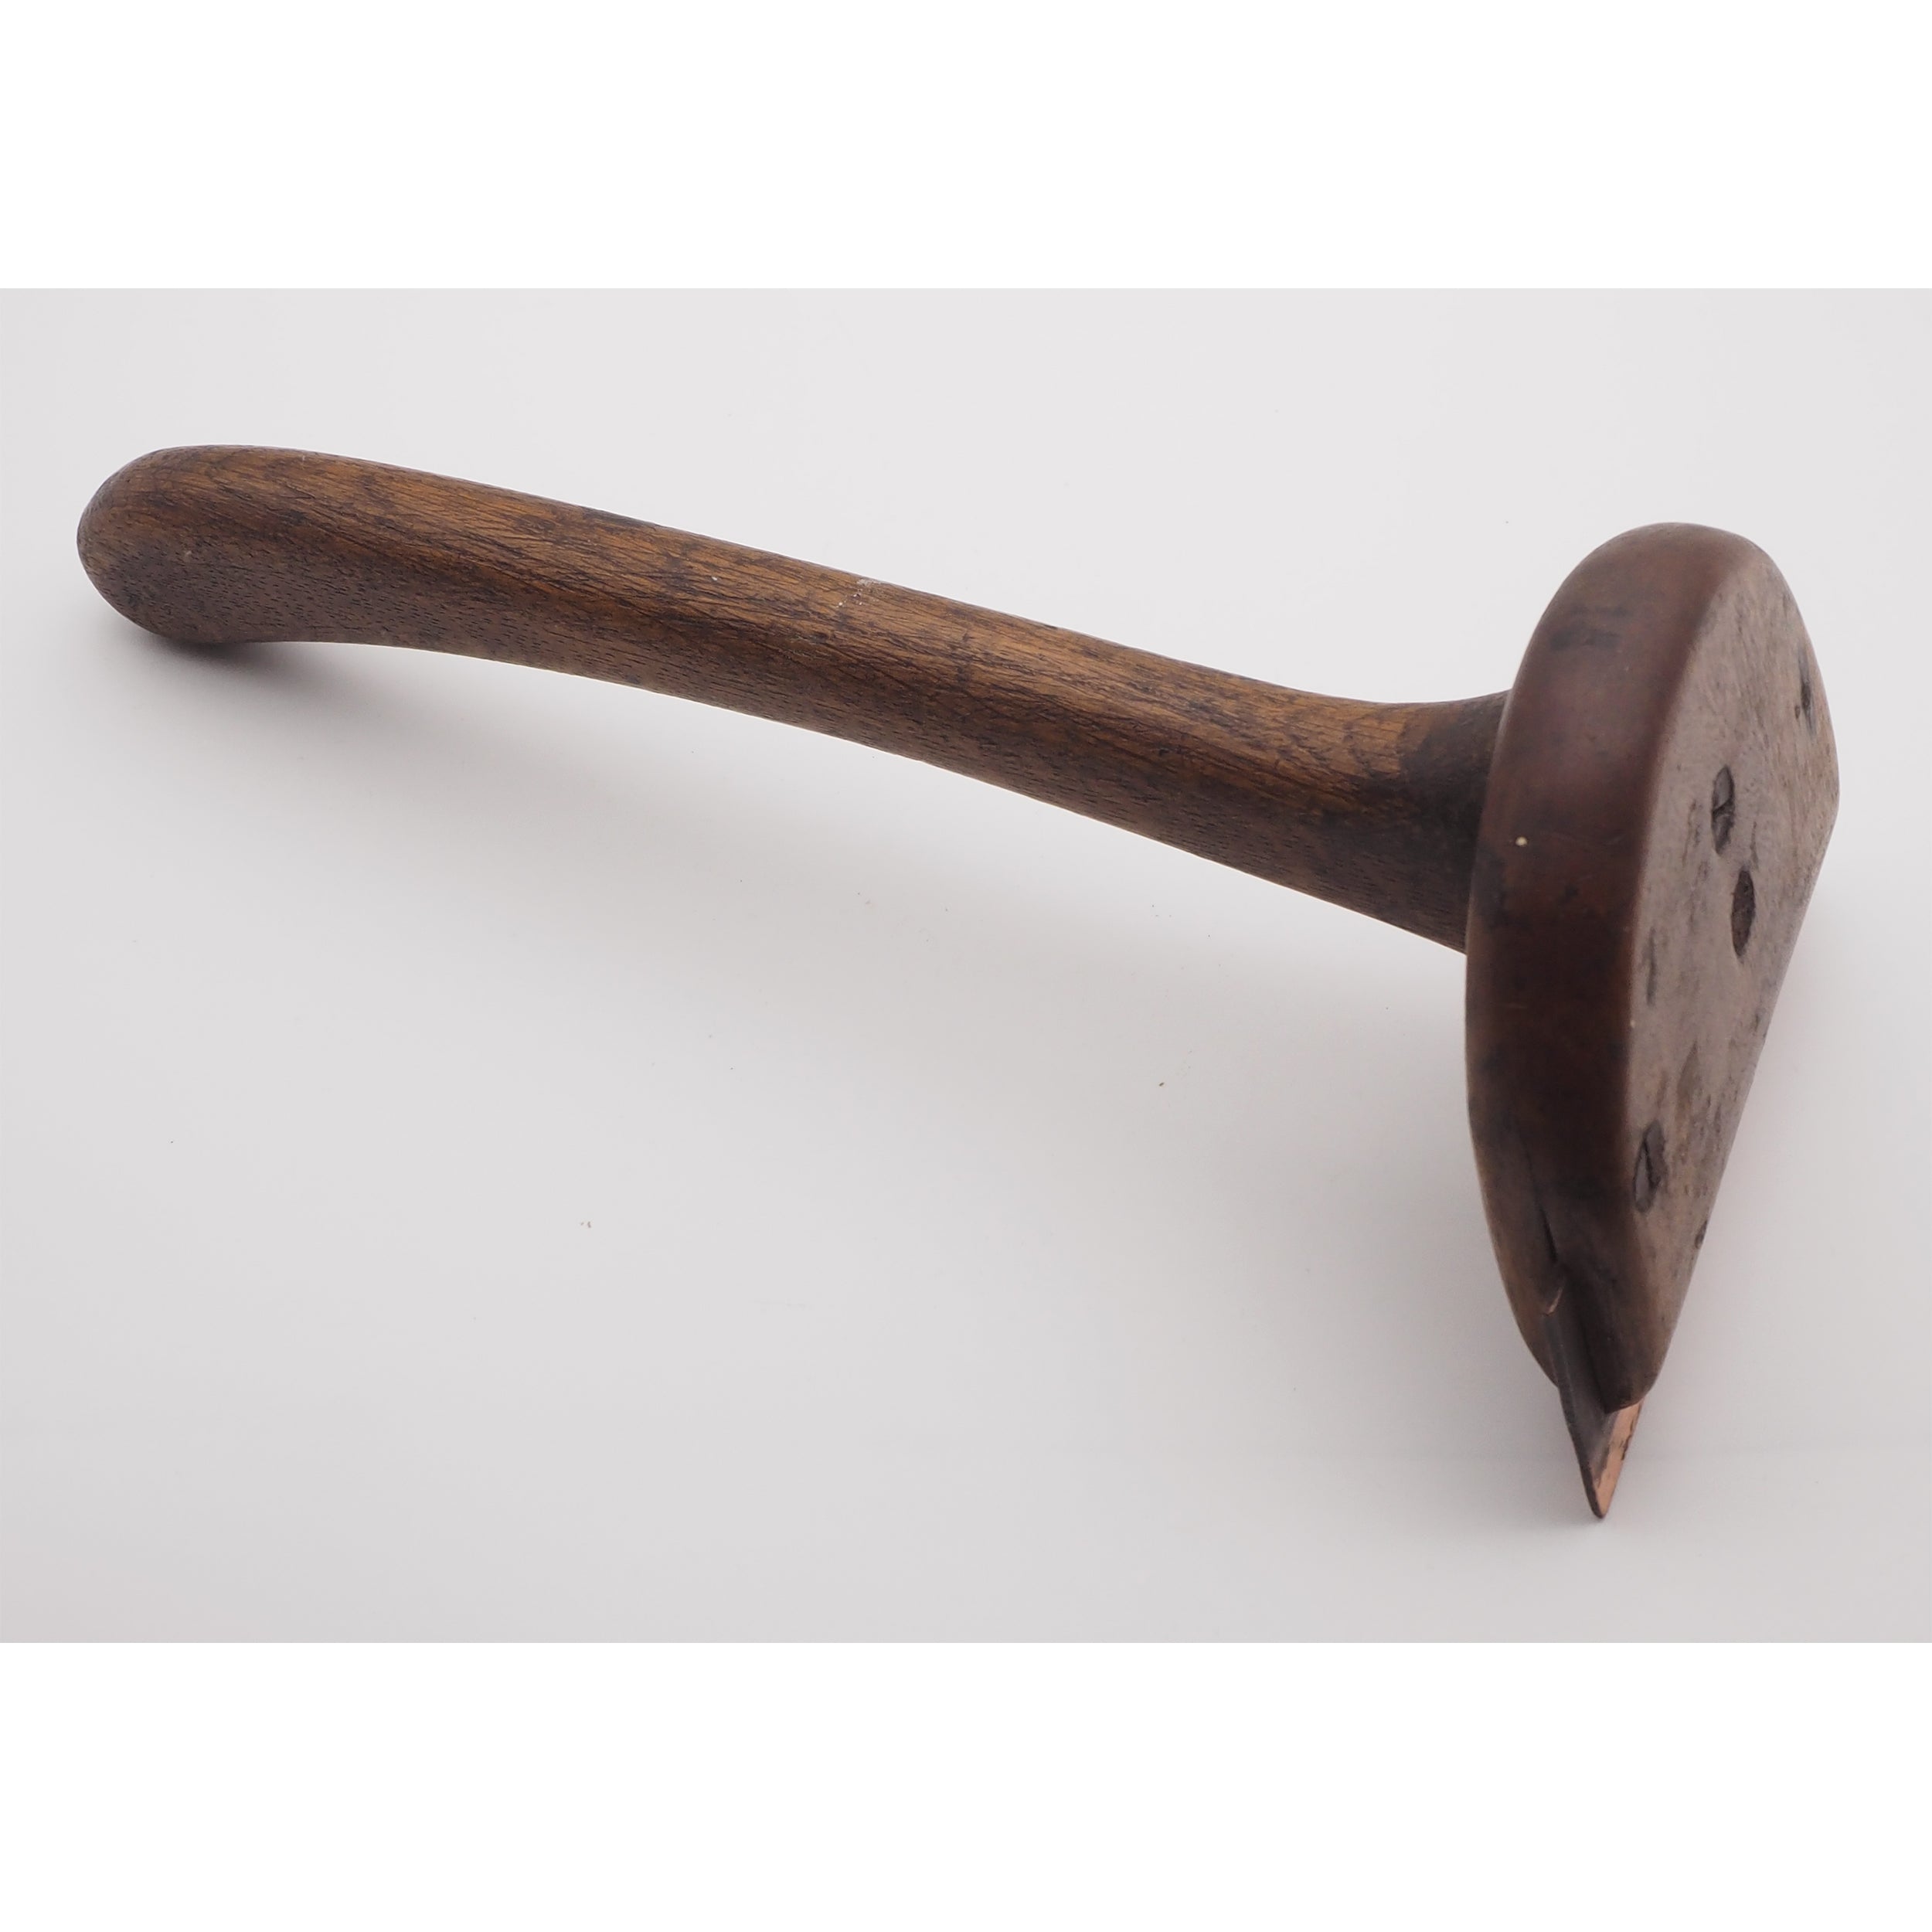 Large 19th Century Veneer Hammer